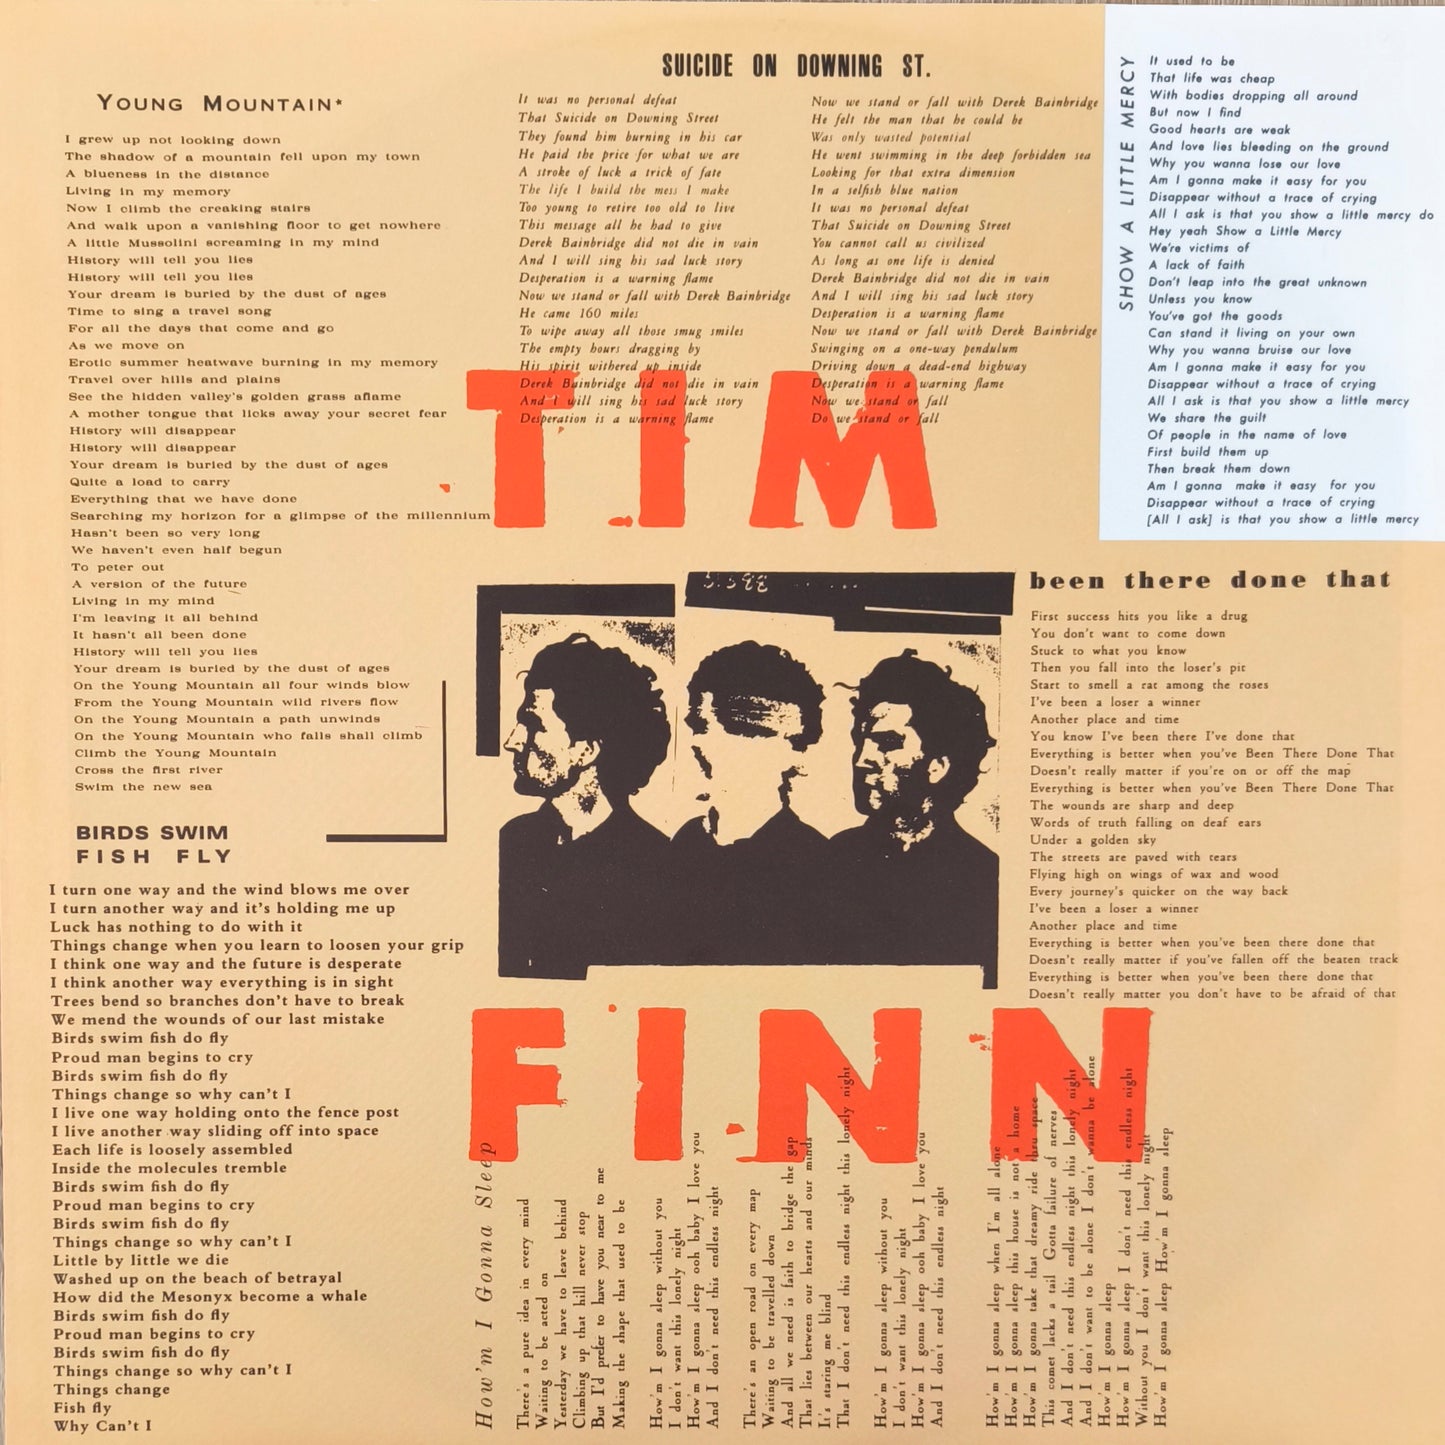 TIM FINN - Tim Finn